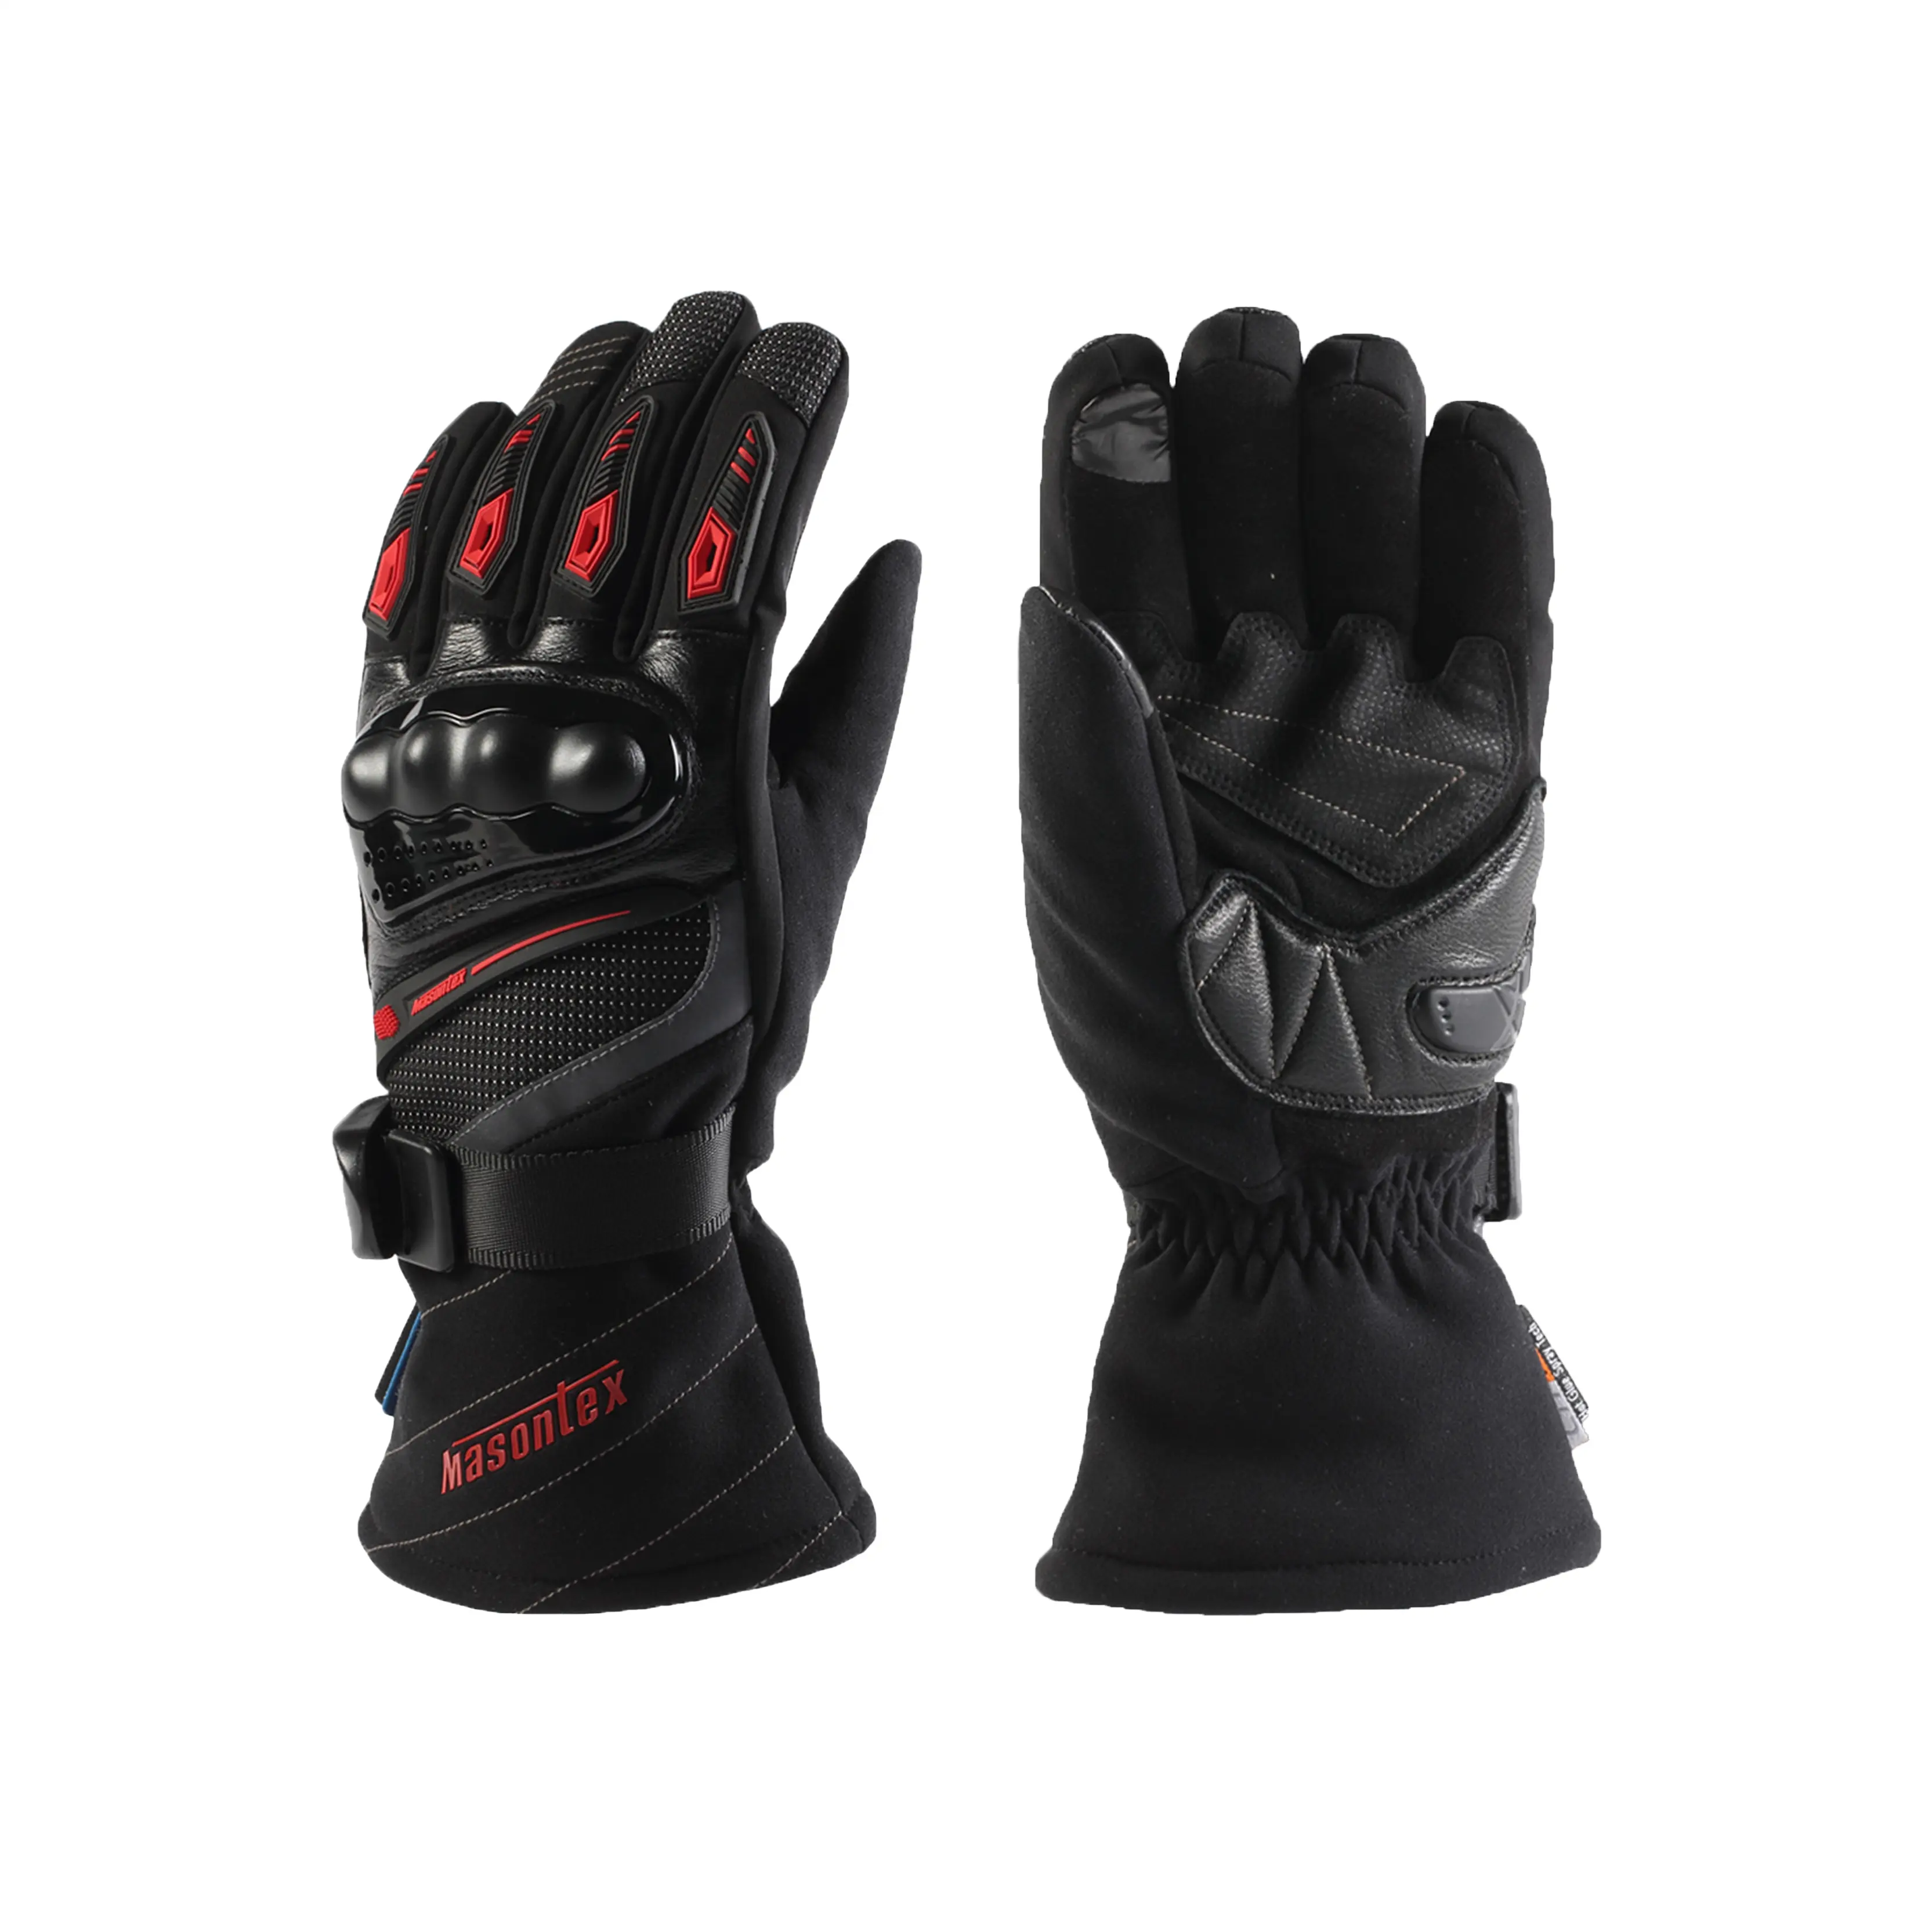 Masontex sarung tangan motor, sarung tangan balap motor anti air Anti angin, refleksi malam, sarung tangan layar sentuh anti selip